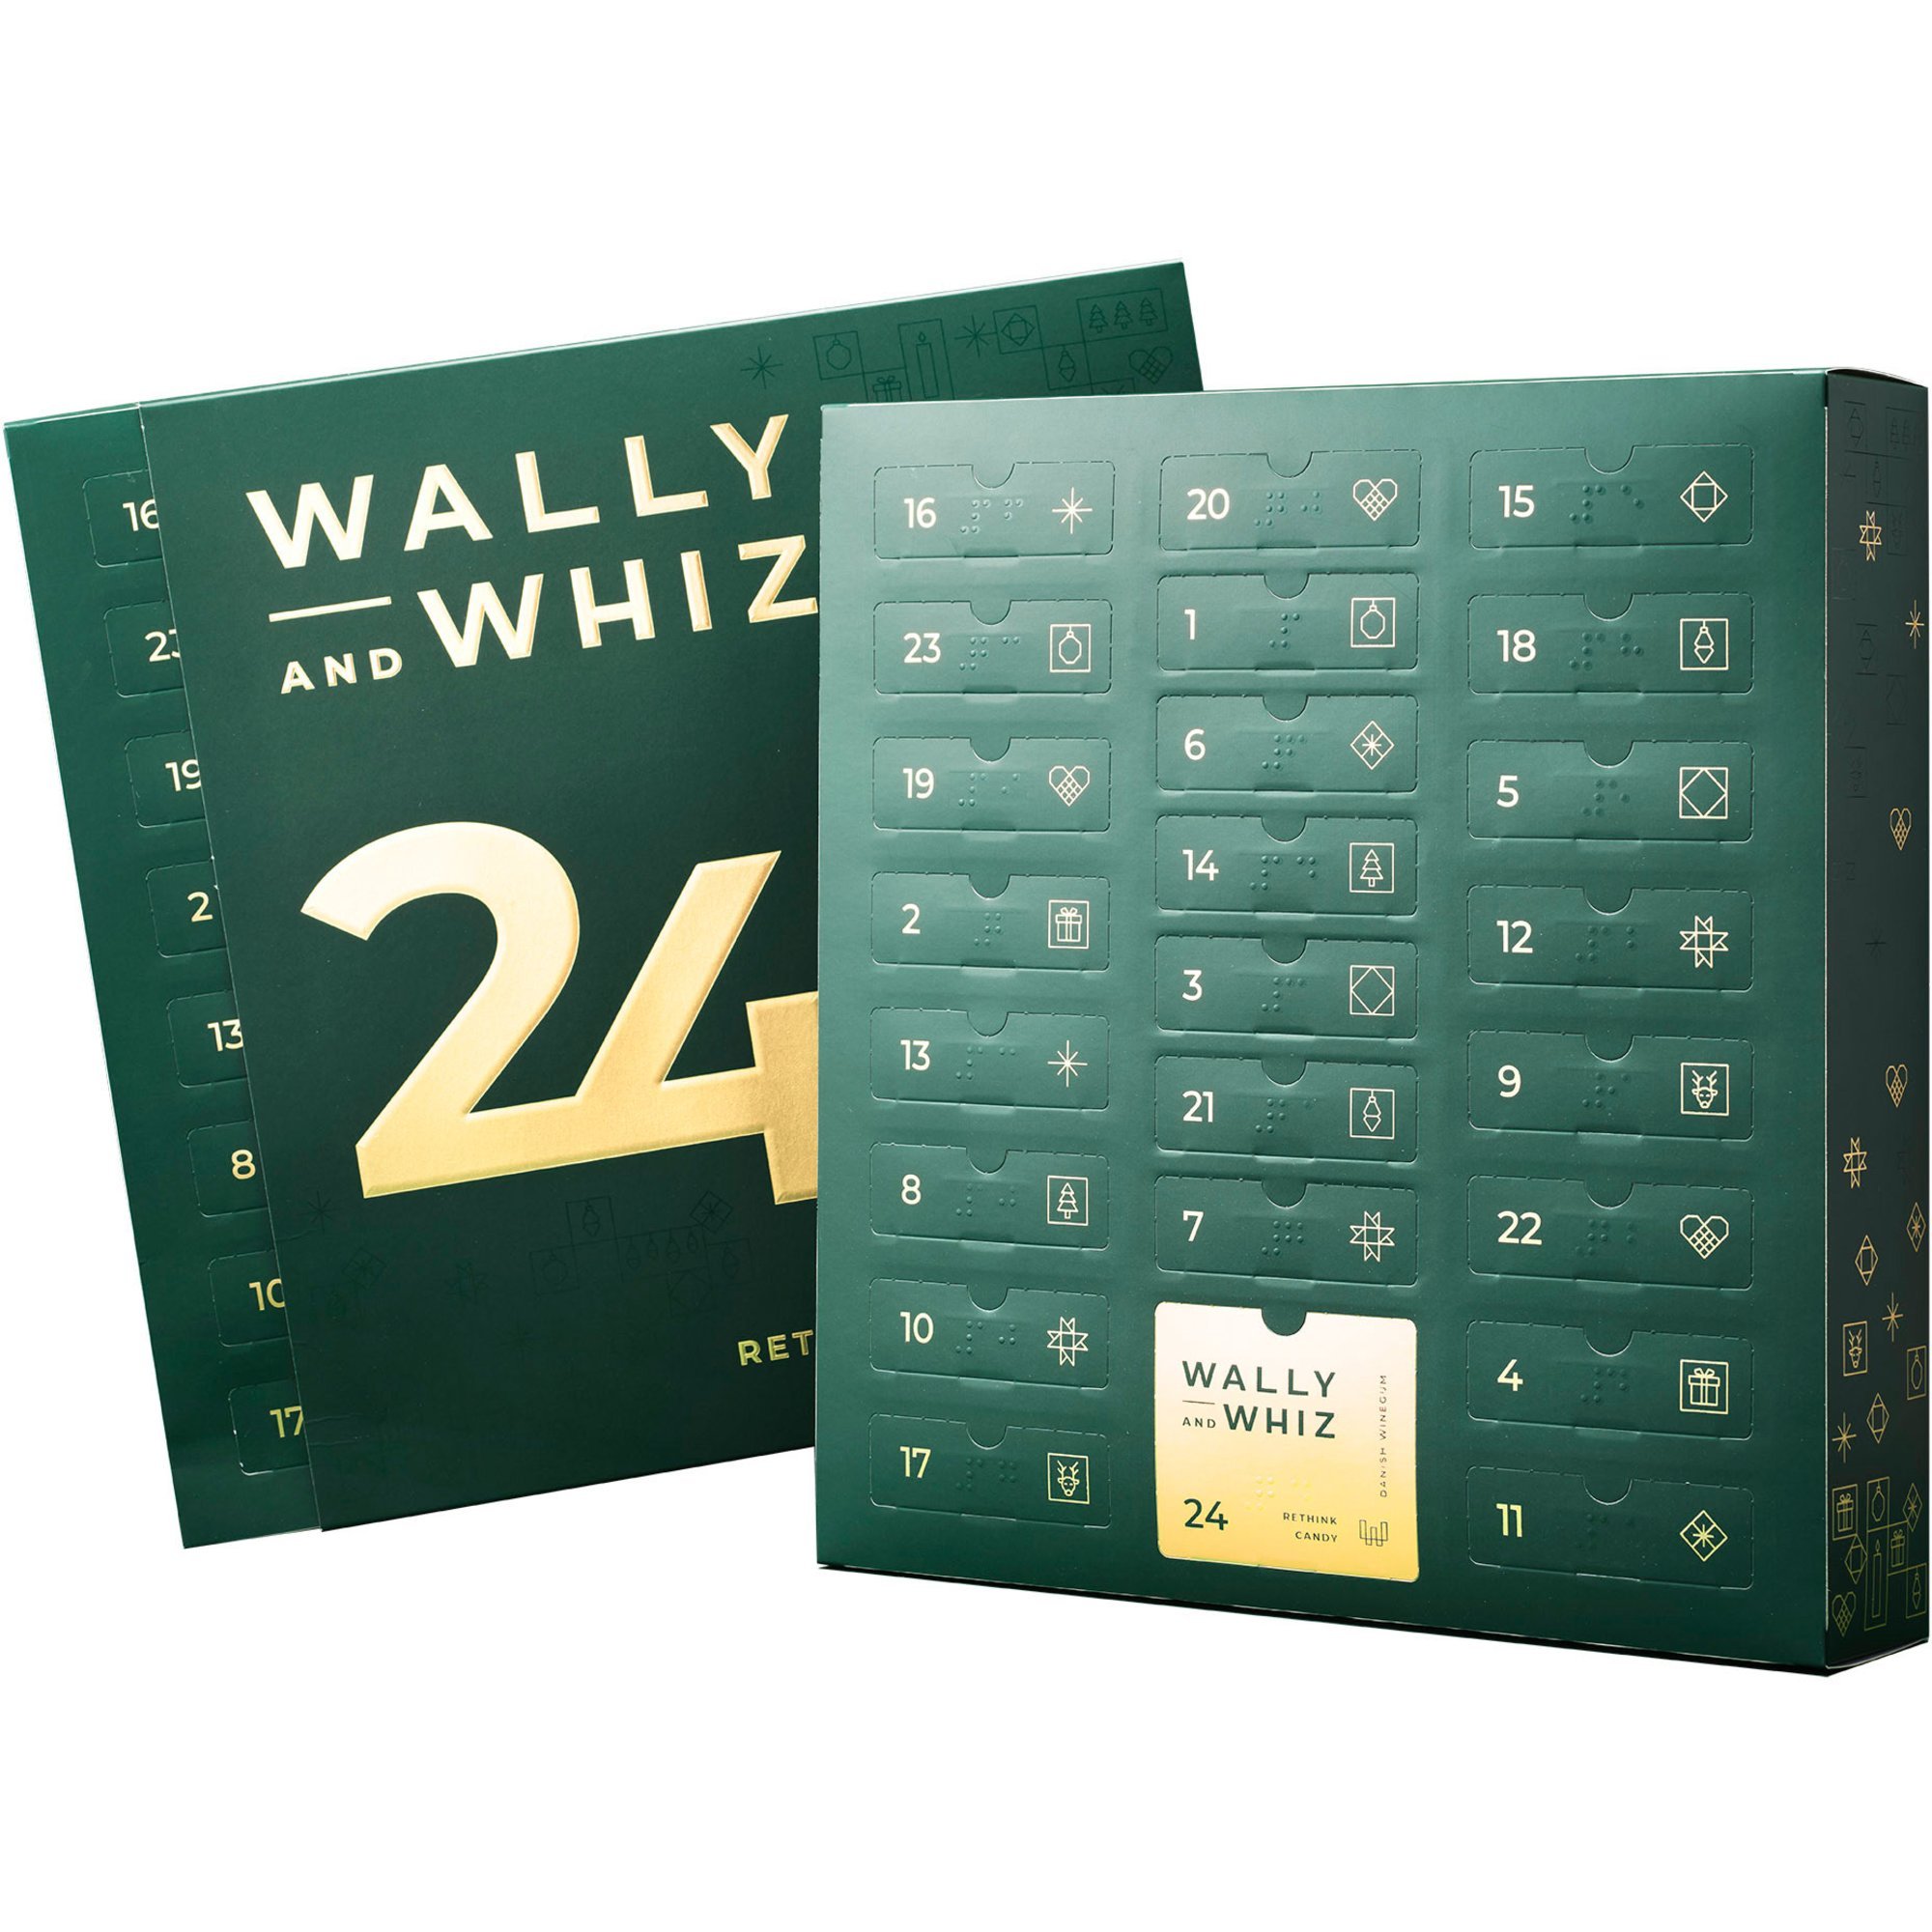 Wally and Whiz Vingummi julekalender 2022, red